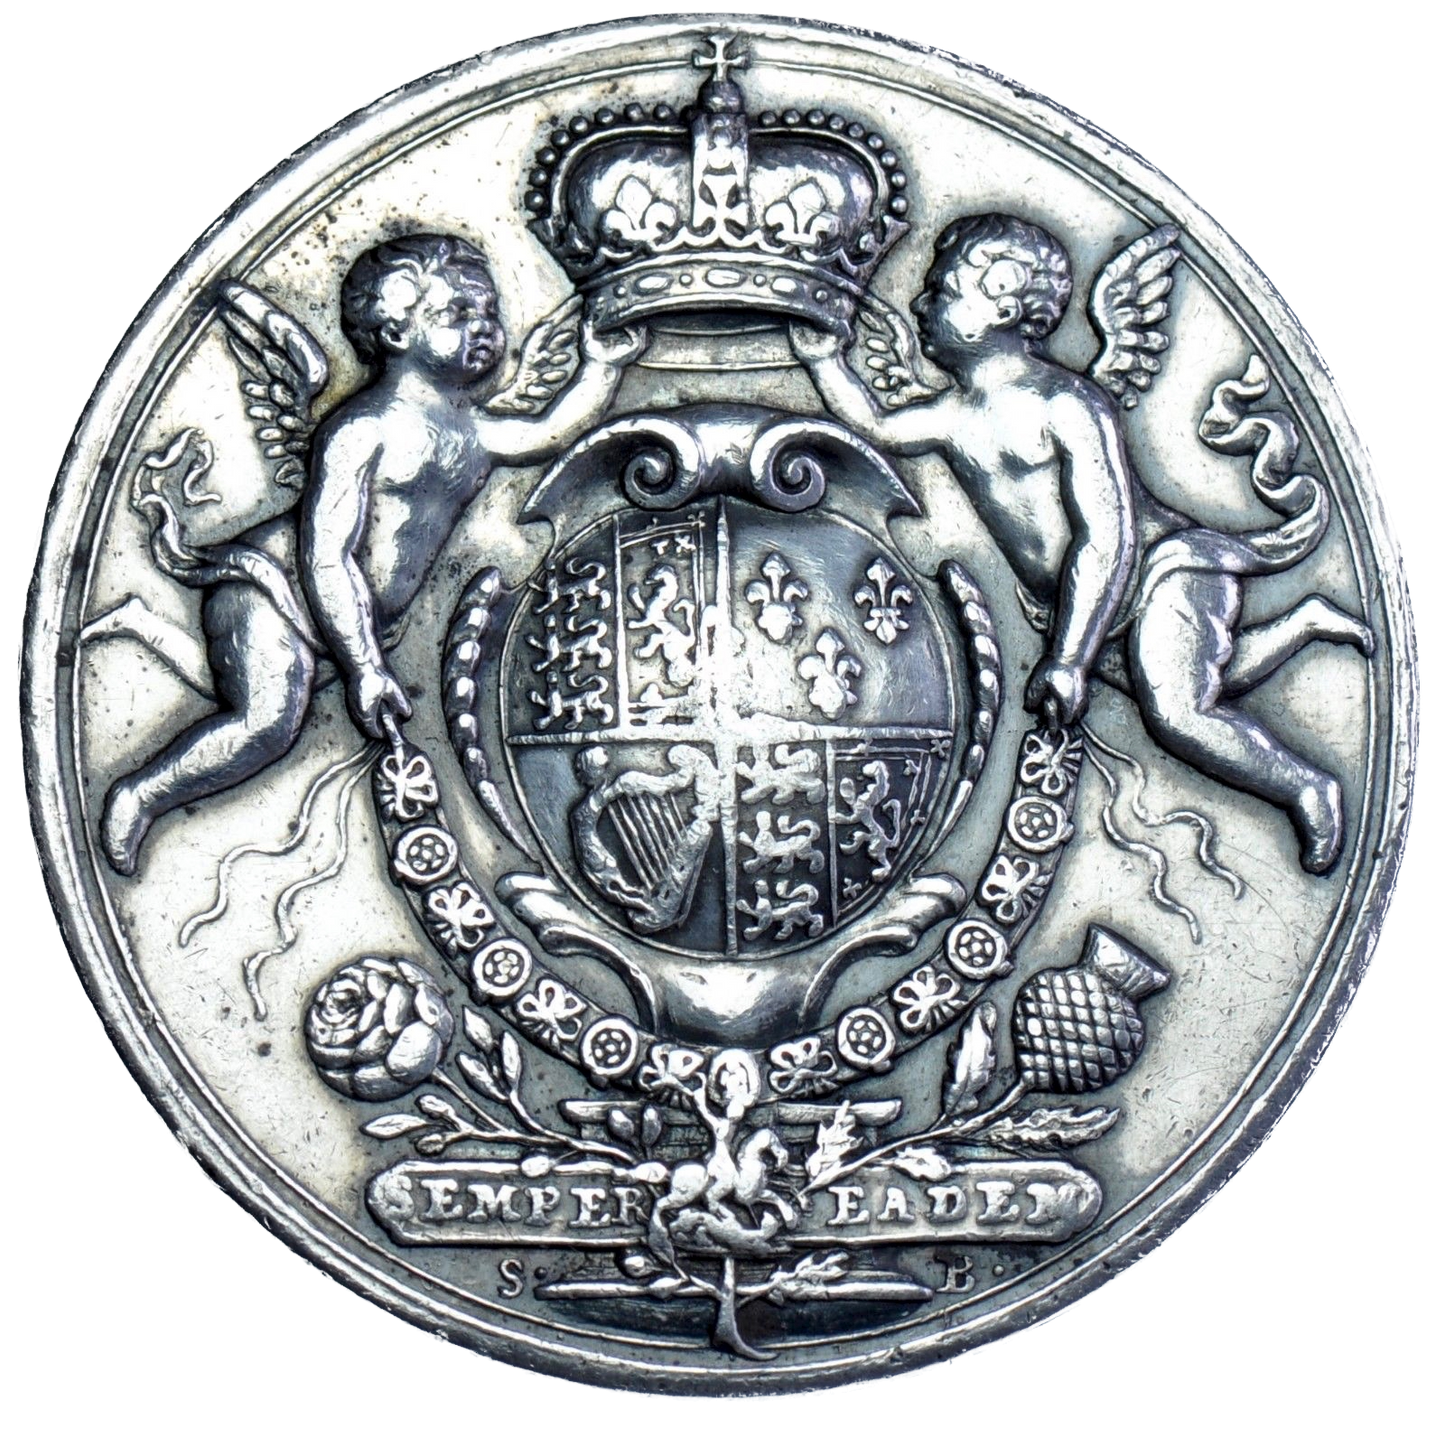 1707 Union of England and Scotland 34mm silver medal MI 296/111 E425 GVF